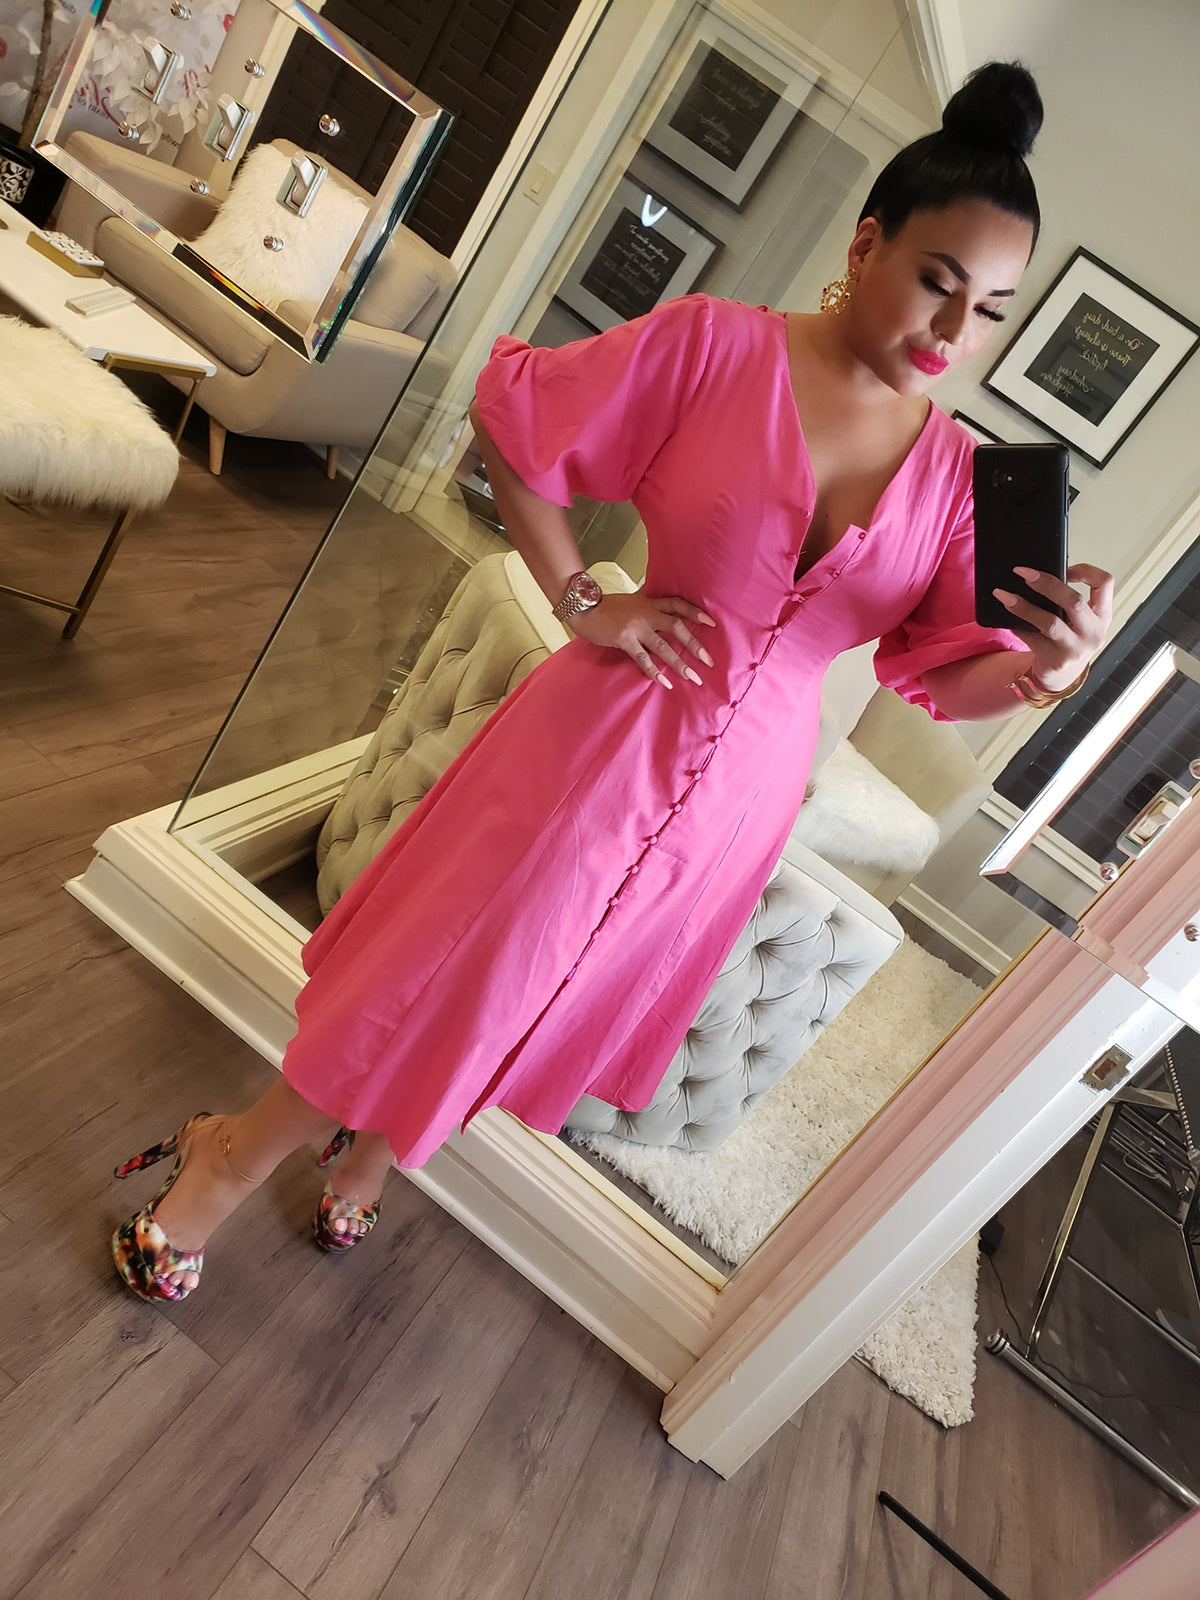 Lady in pink Dress